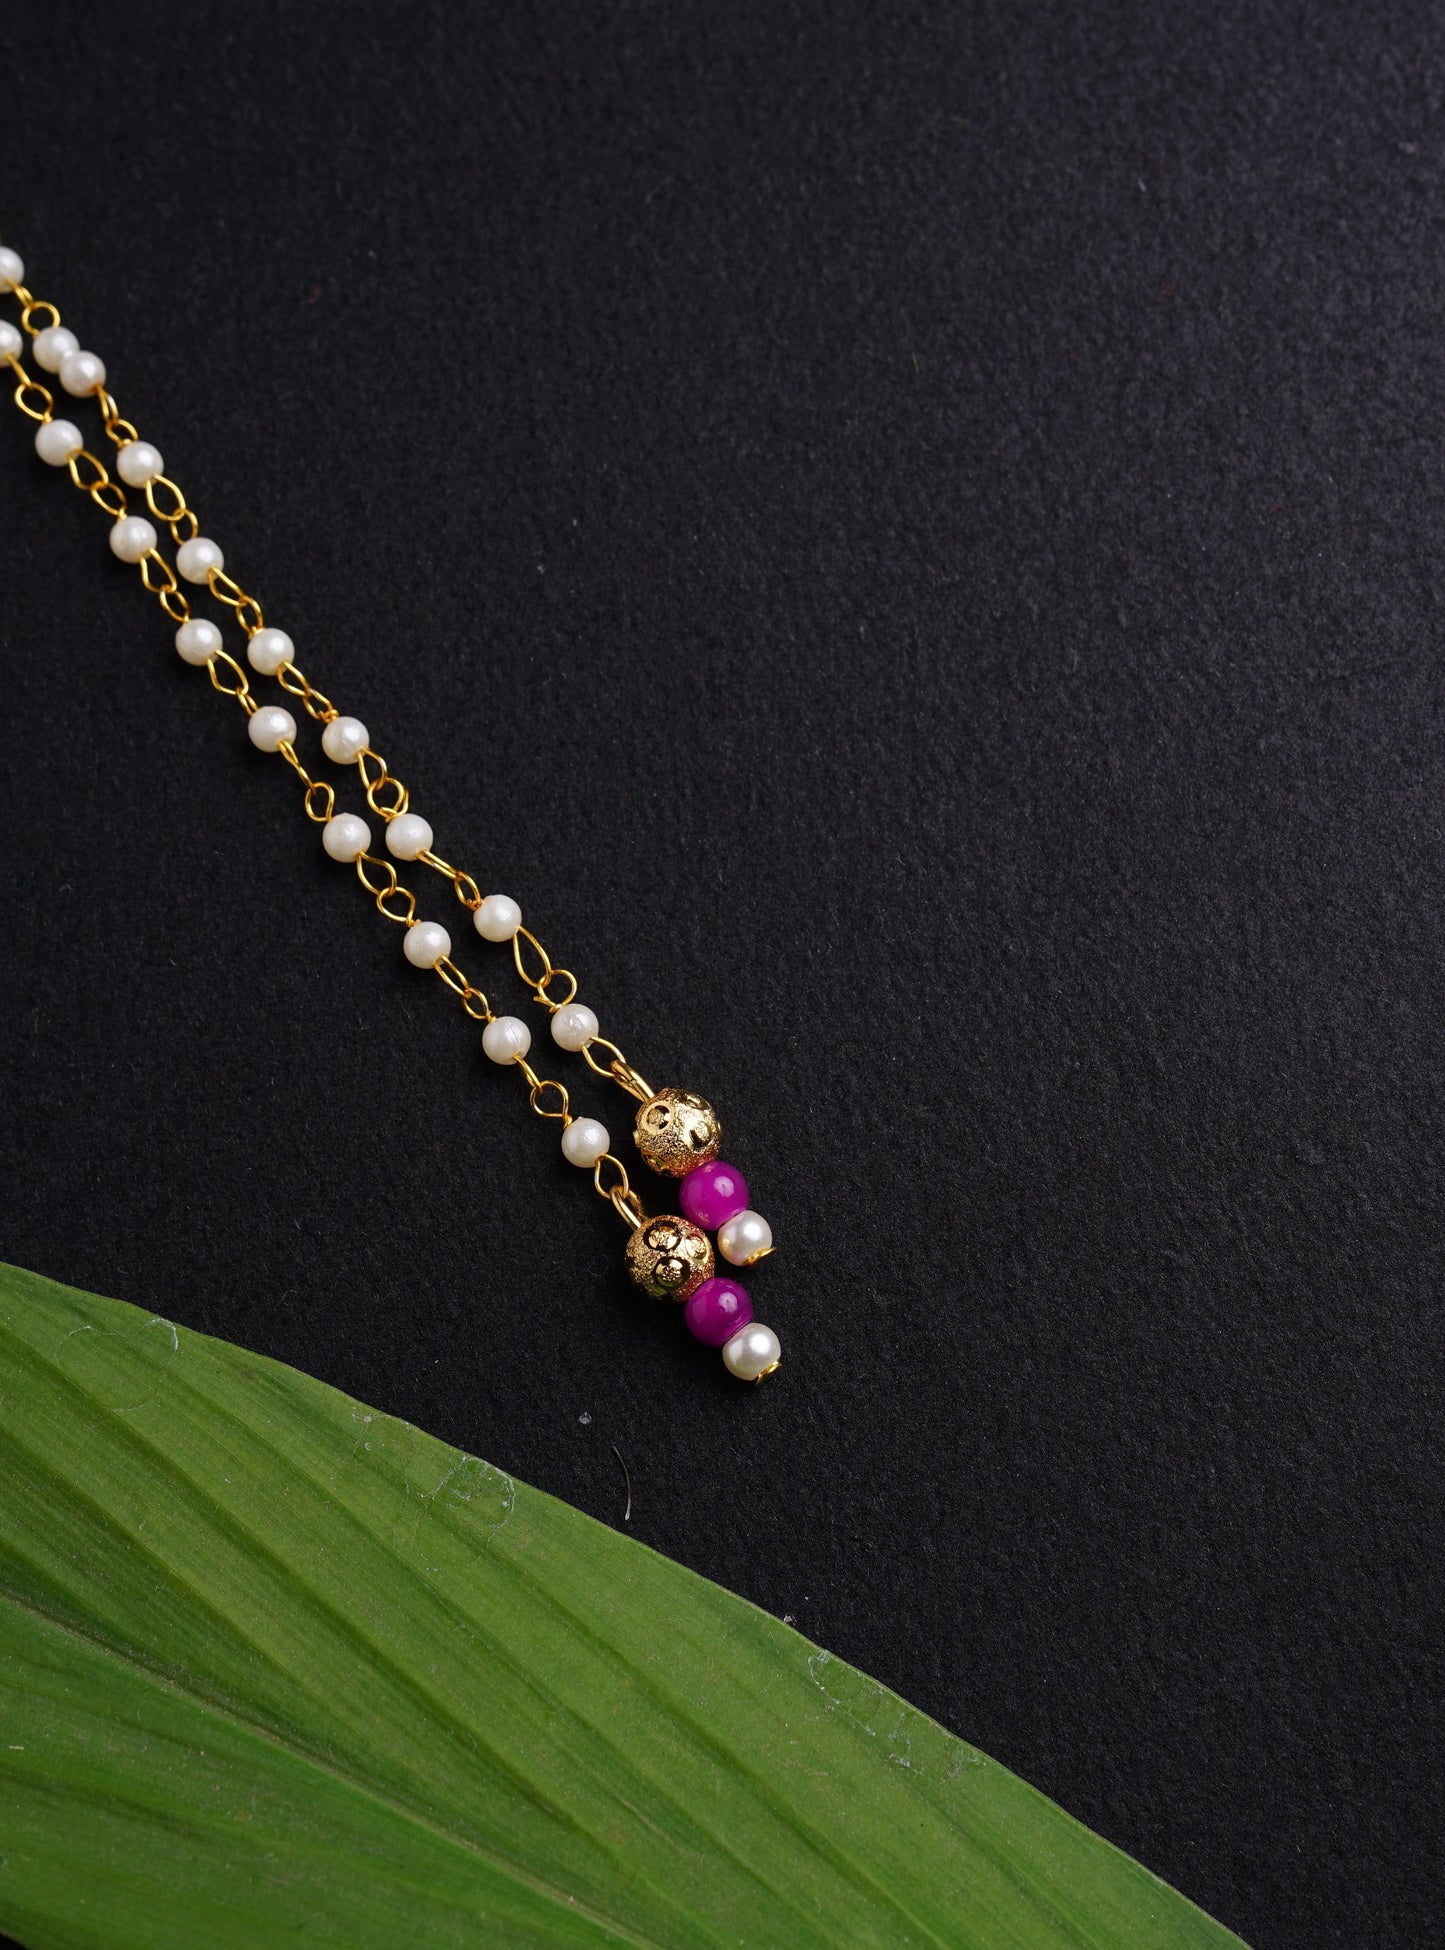 Pearls Mundavalya wit Golden Finding and Colorful Glass Bead for Batu Soyara Ethnics Studio